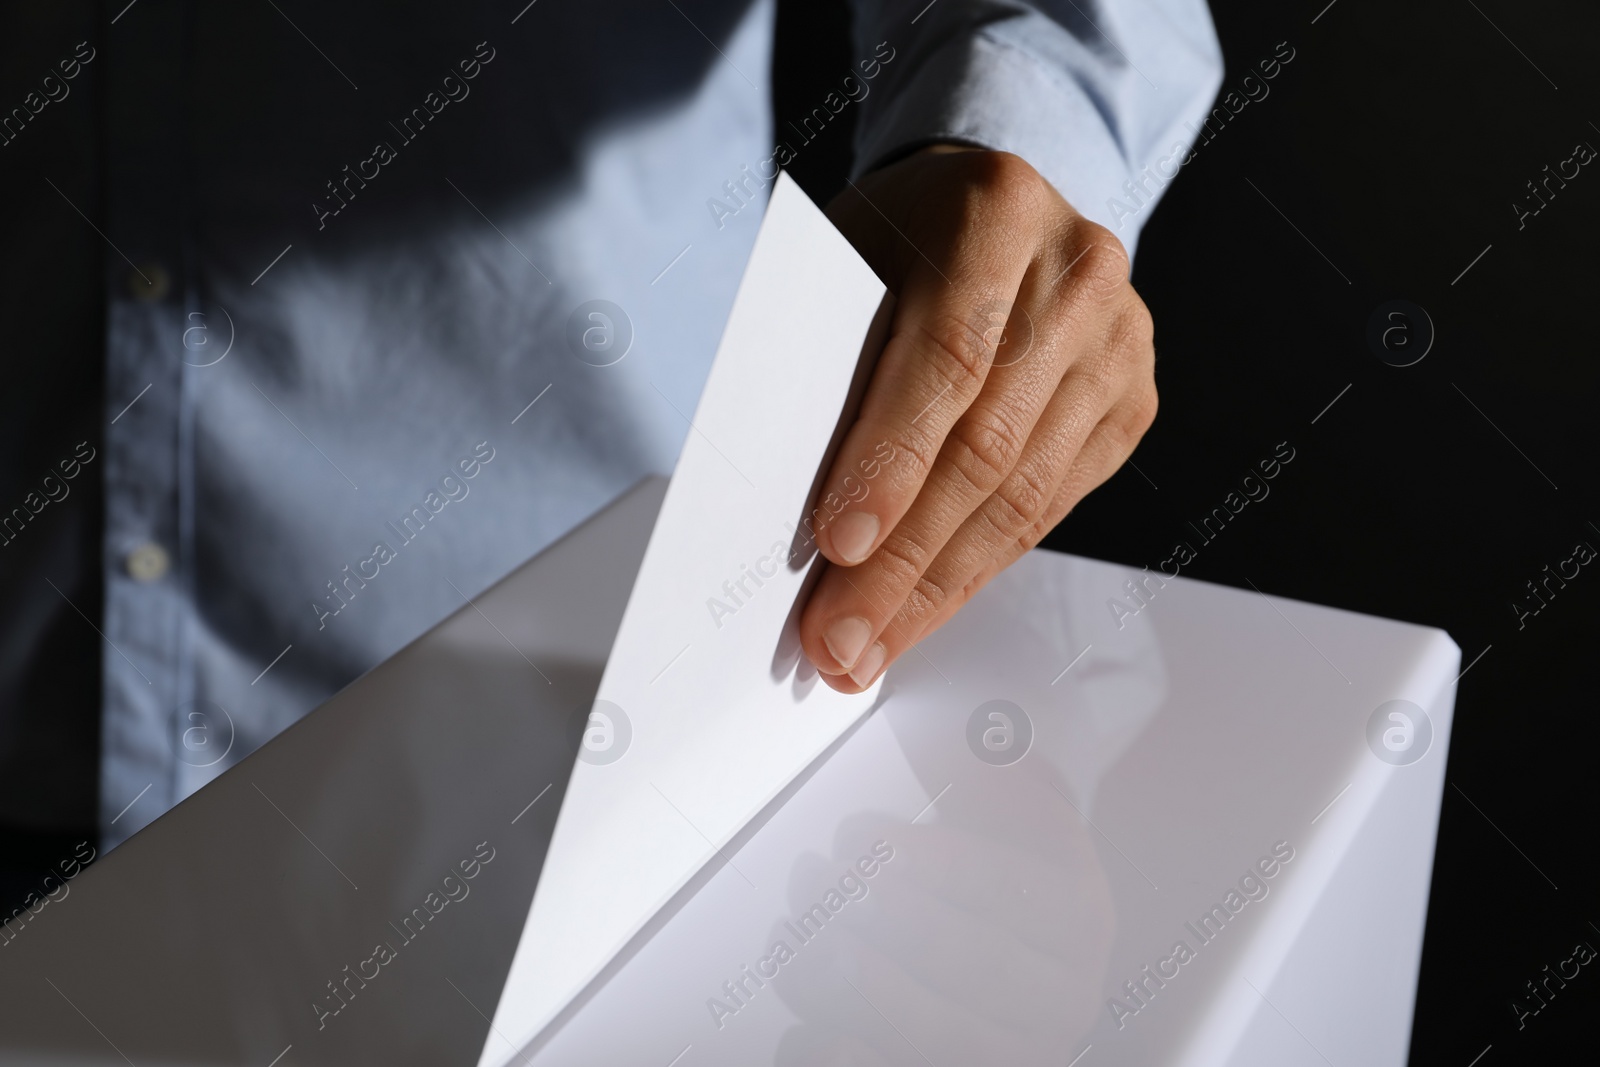 Photo of Man putting his vote into ballot box on black background, closeup